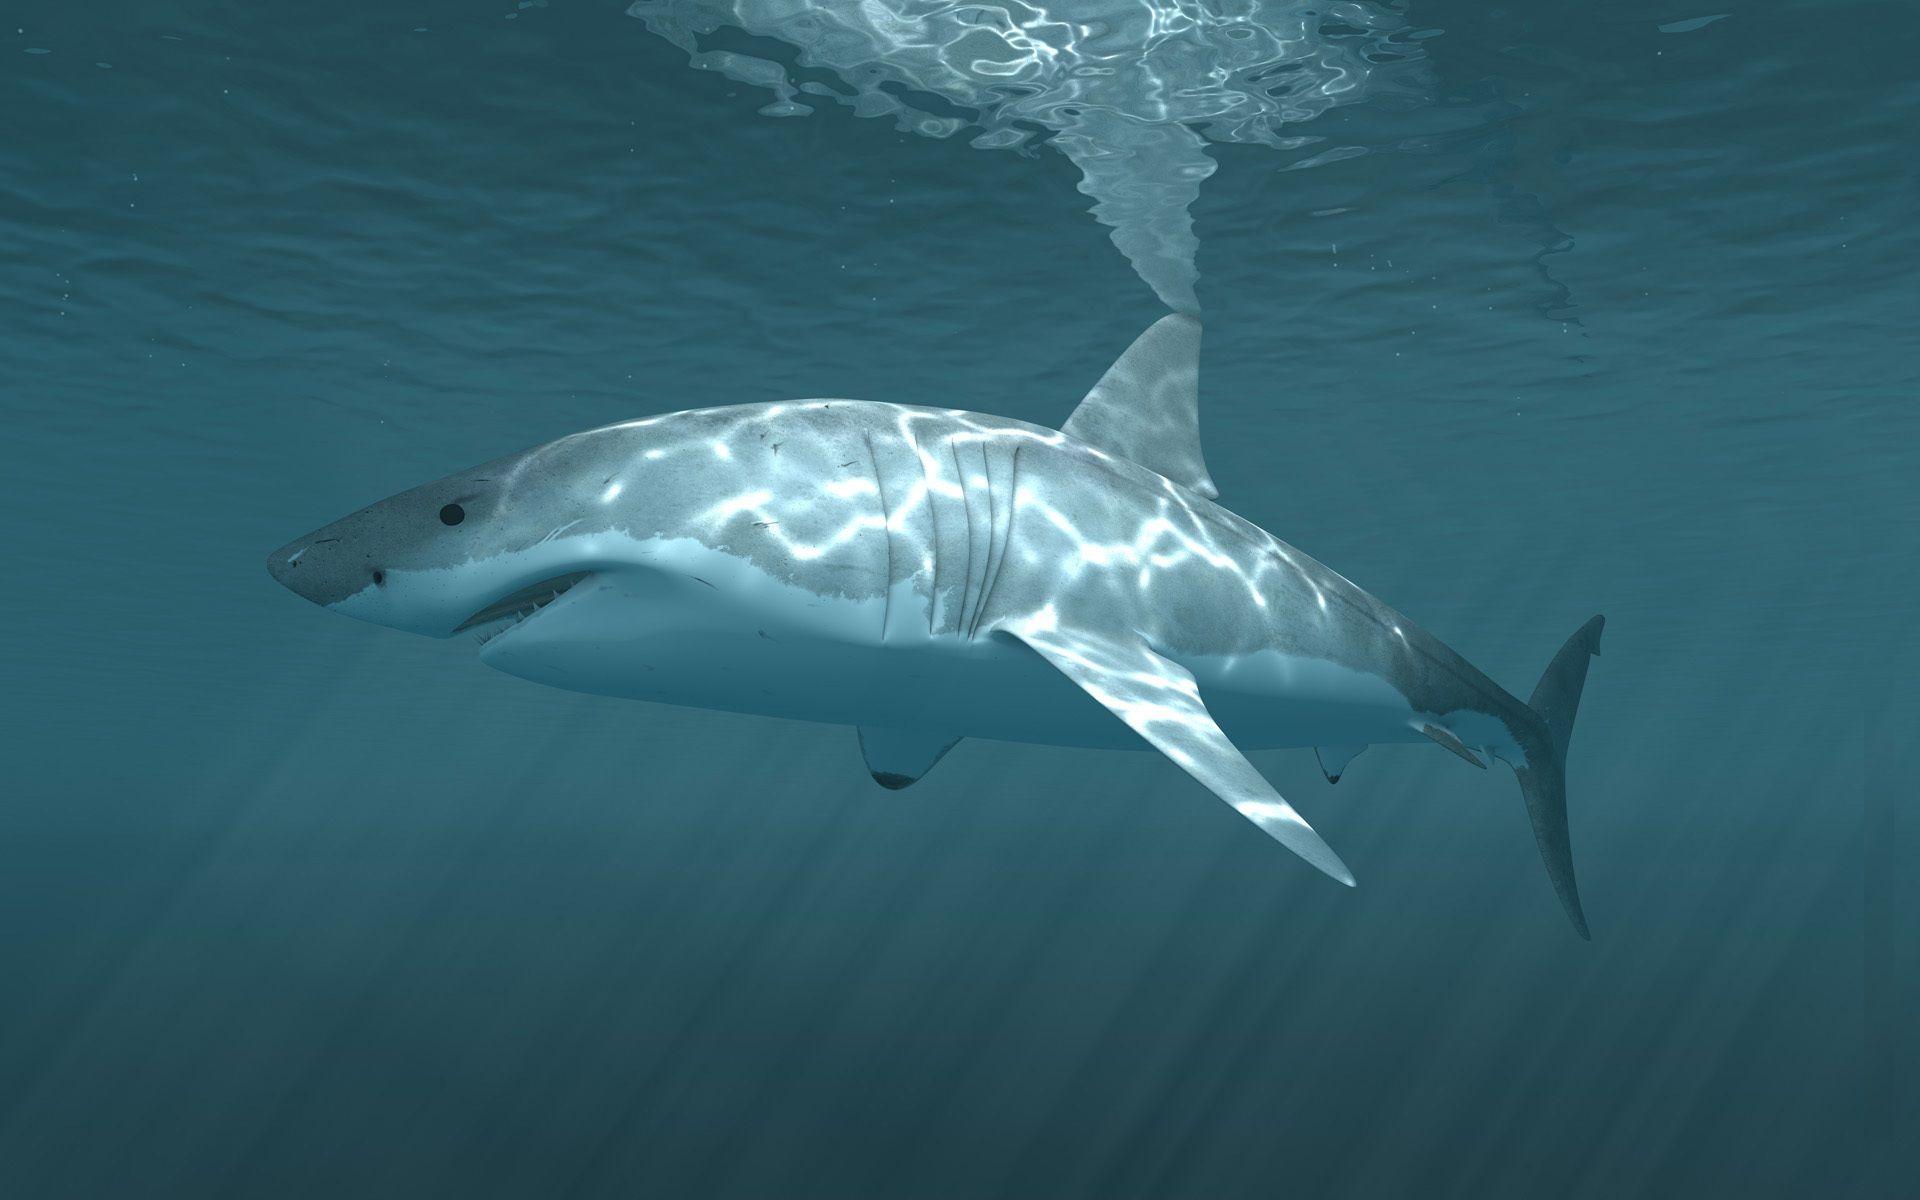 Dangerous Shark HD Wallpaper Free Download. HD Wallpaper Free Download. Shark picture, White sharks, Great white shark